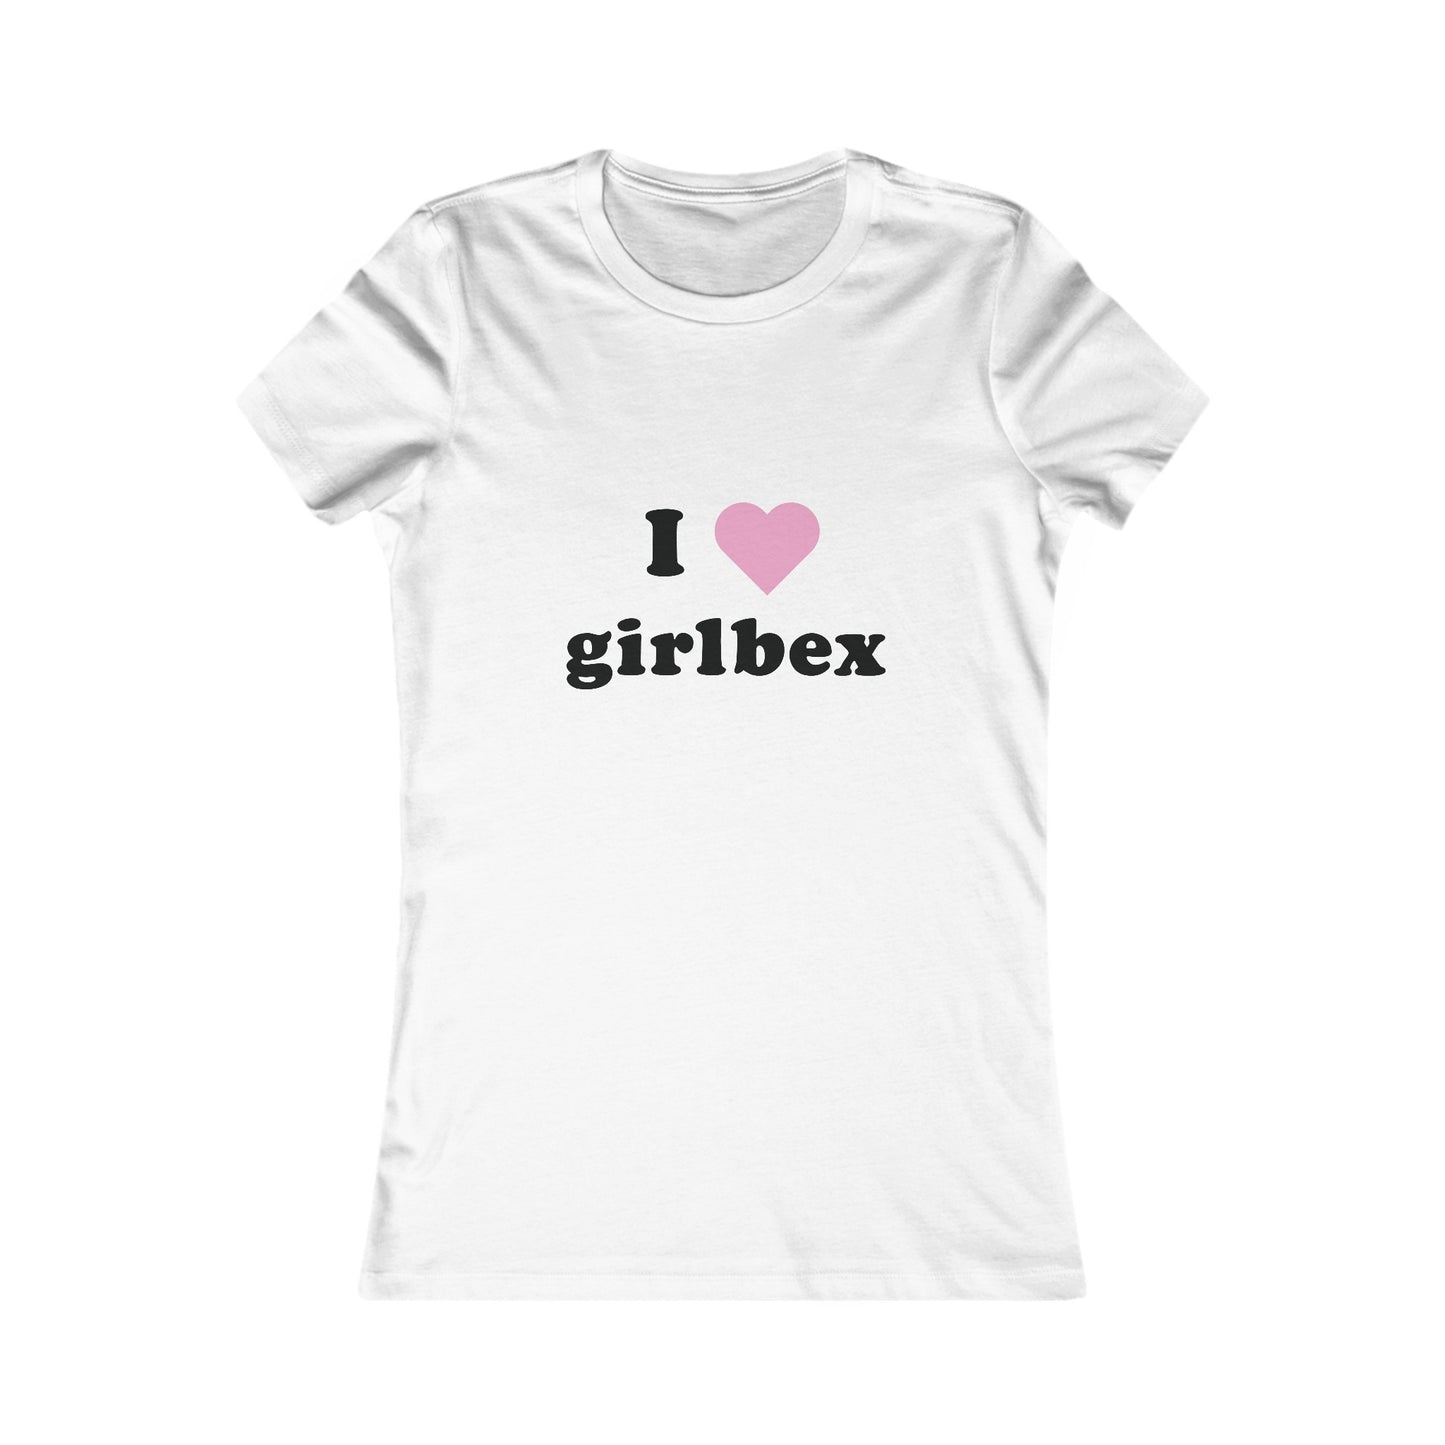 I love girlbex baby tee